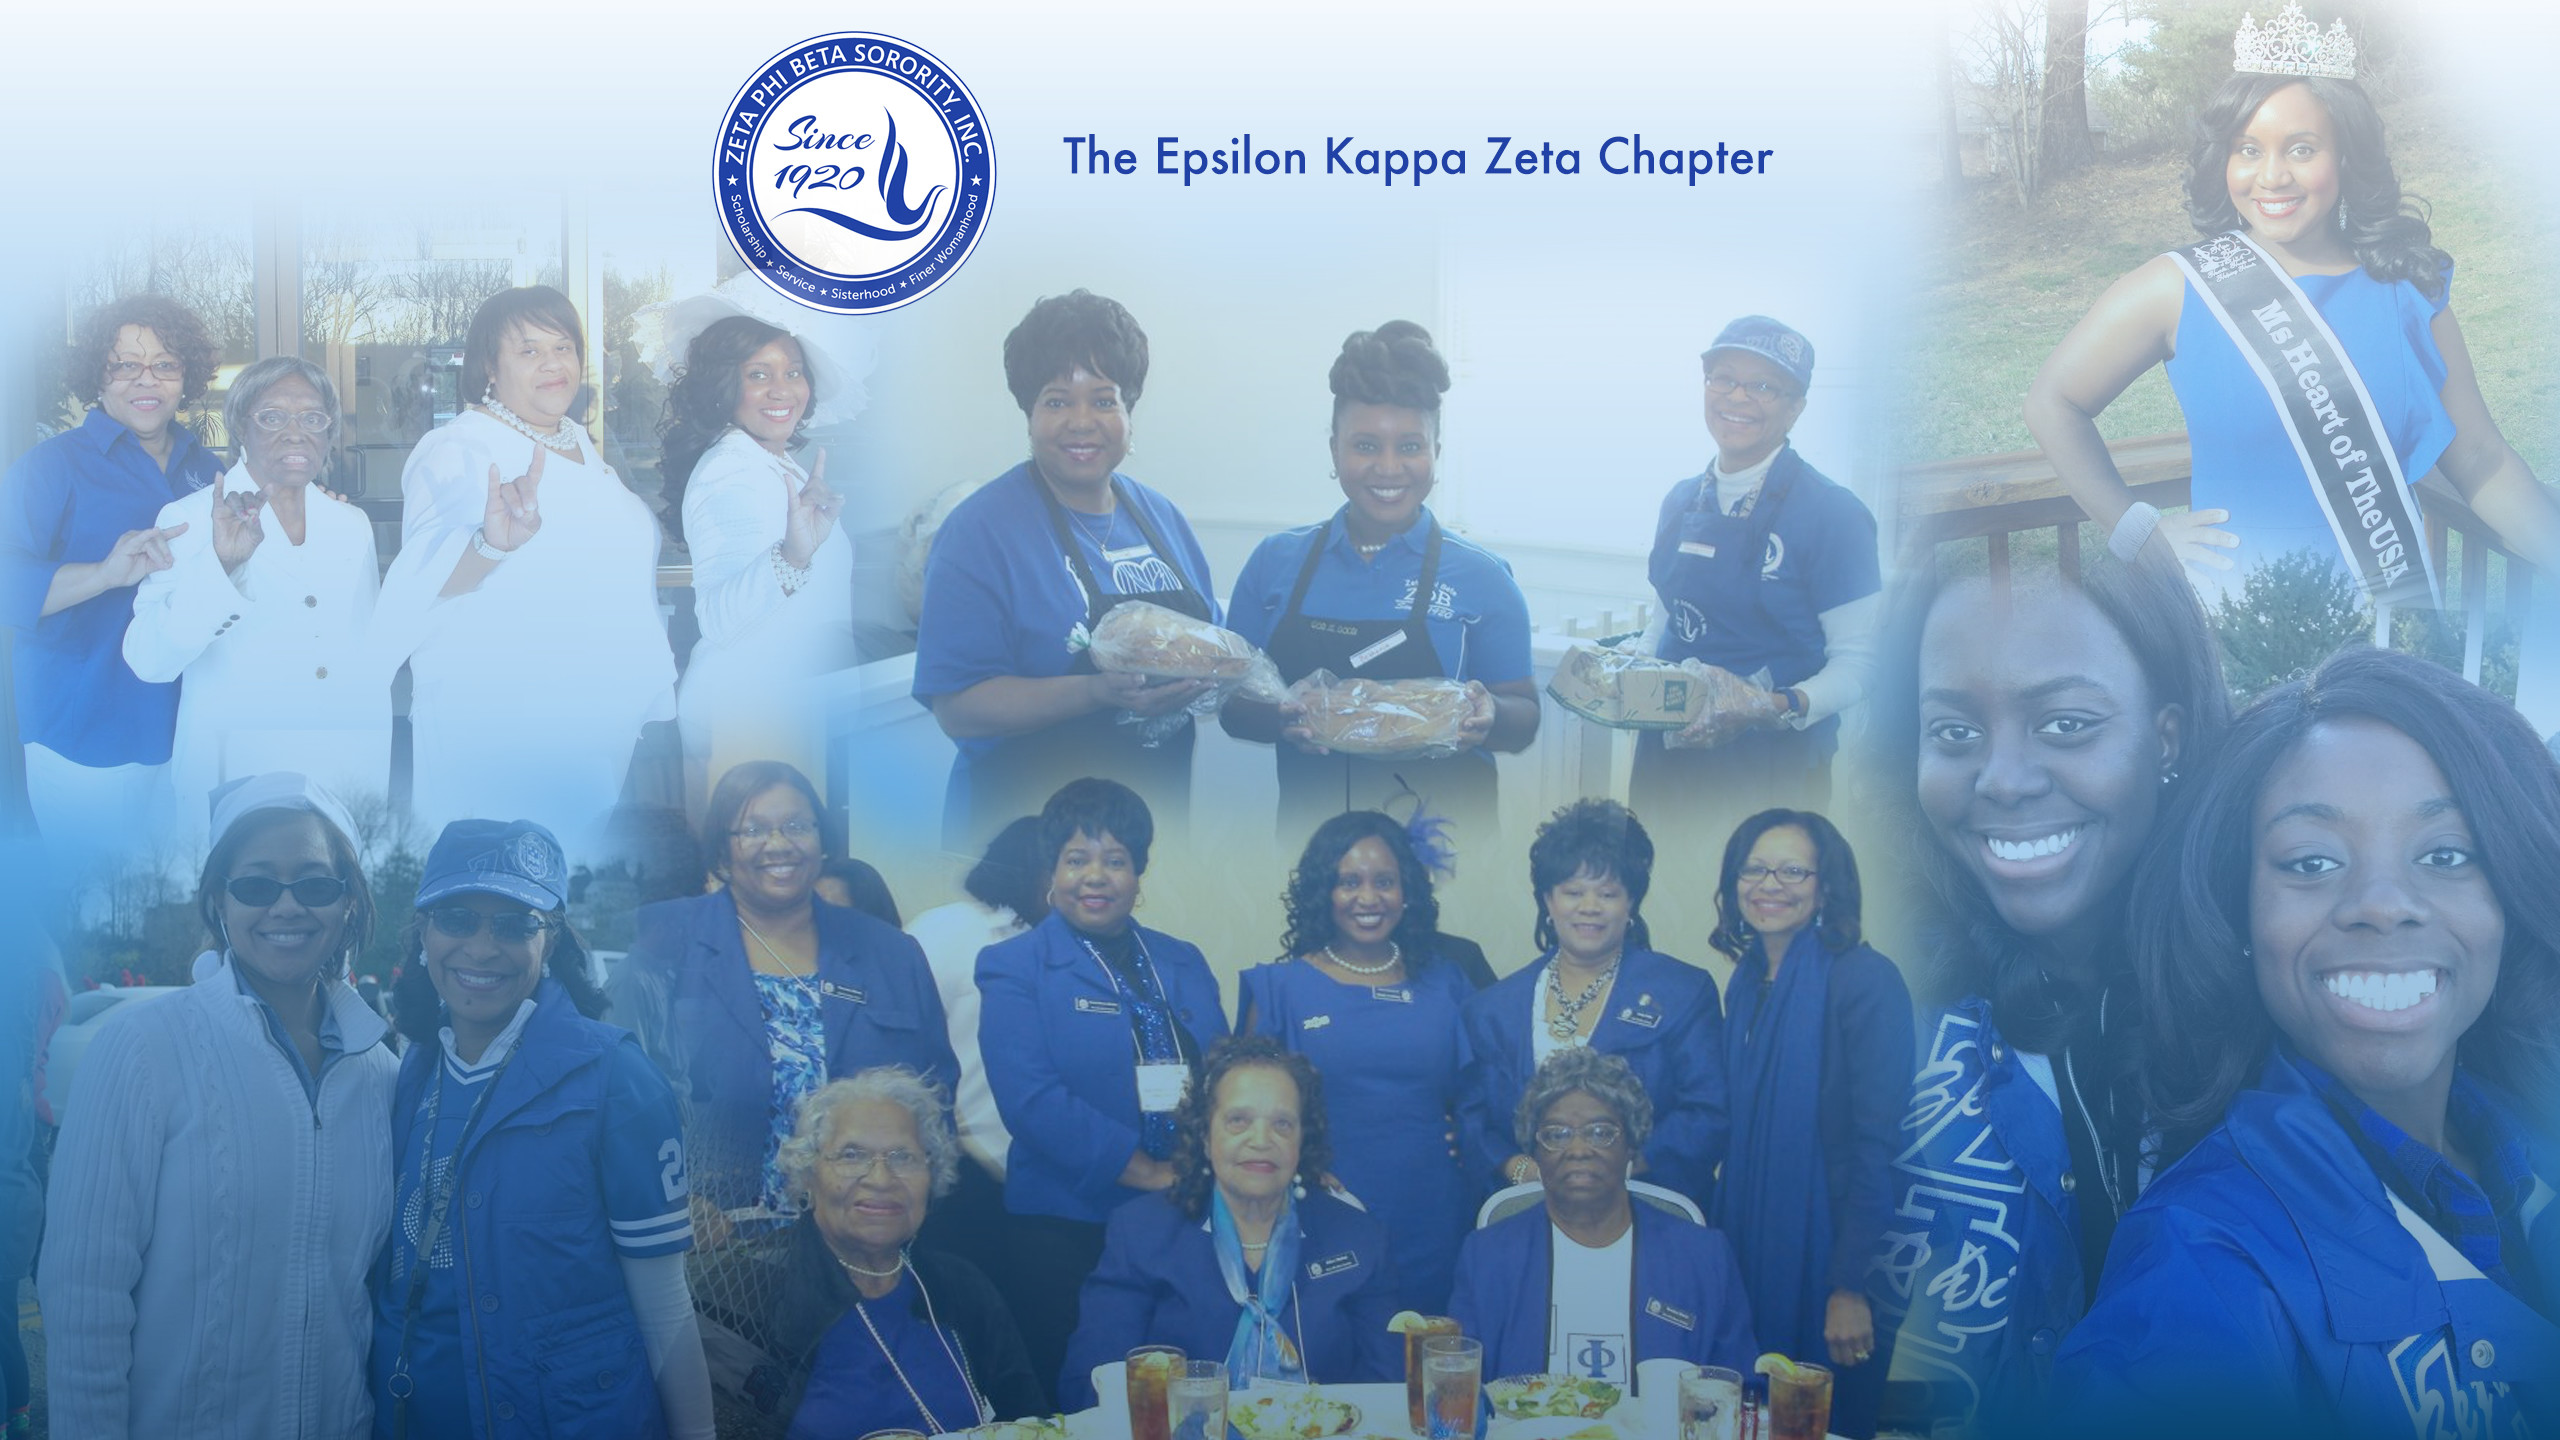 2560x1440 Epsilon Kappa Zeta Chapter of Zeta Phi Beta Sorority Inc. – Scholarship,  Sisterly Love, Service, Finer Womanhood